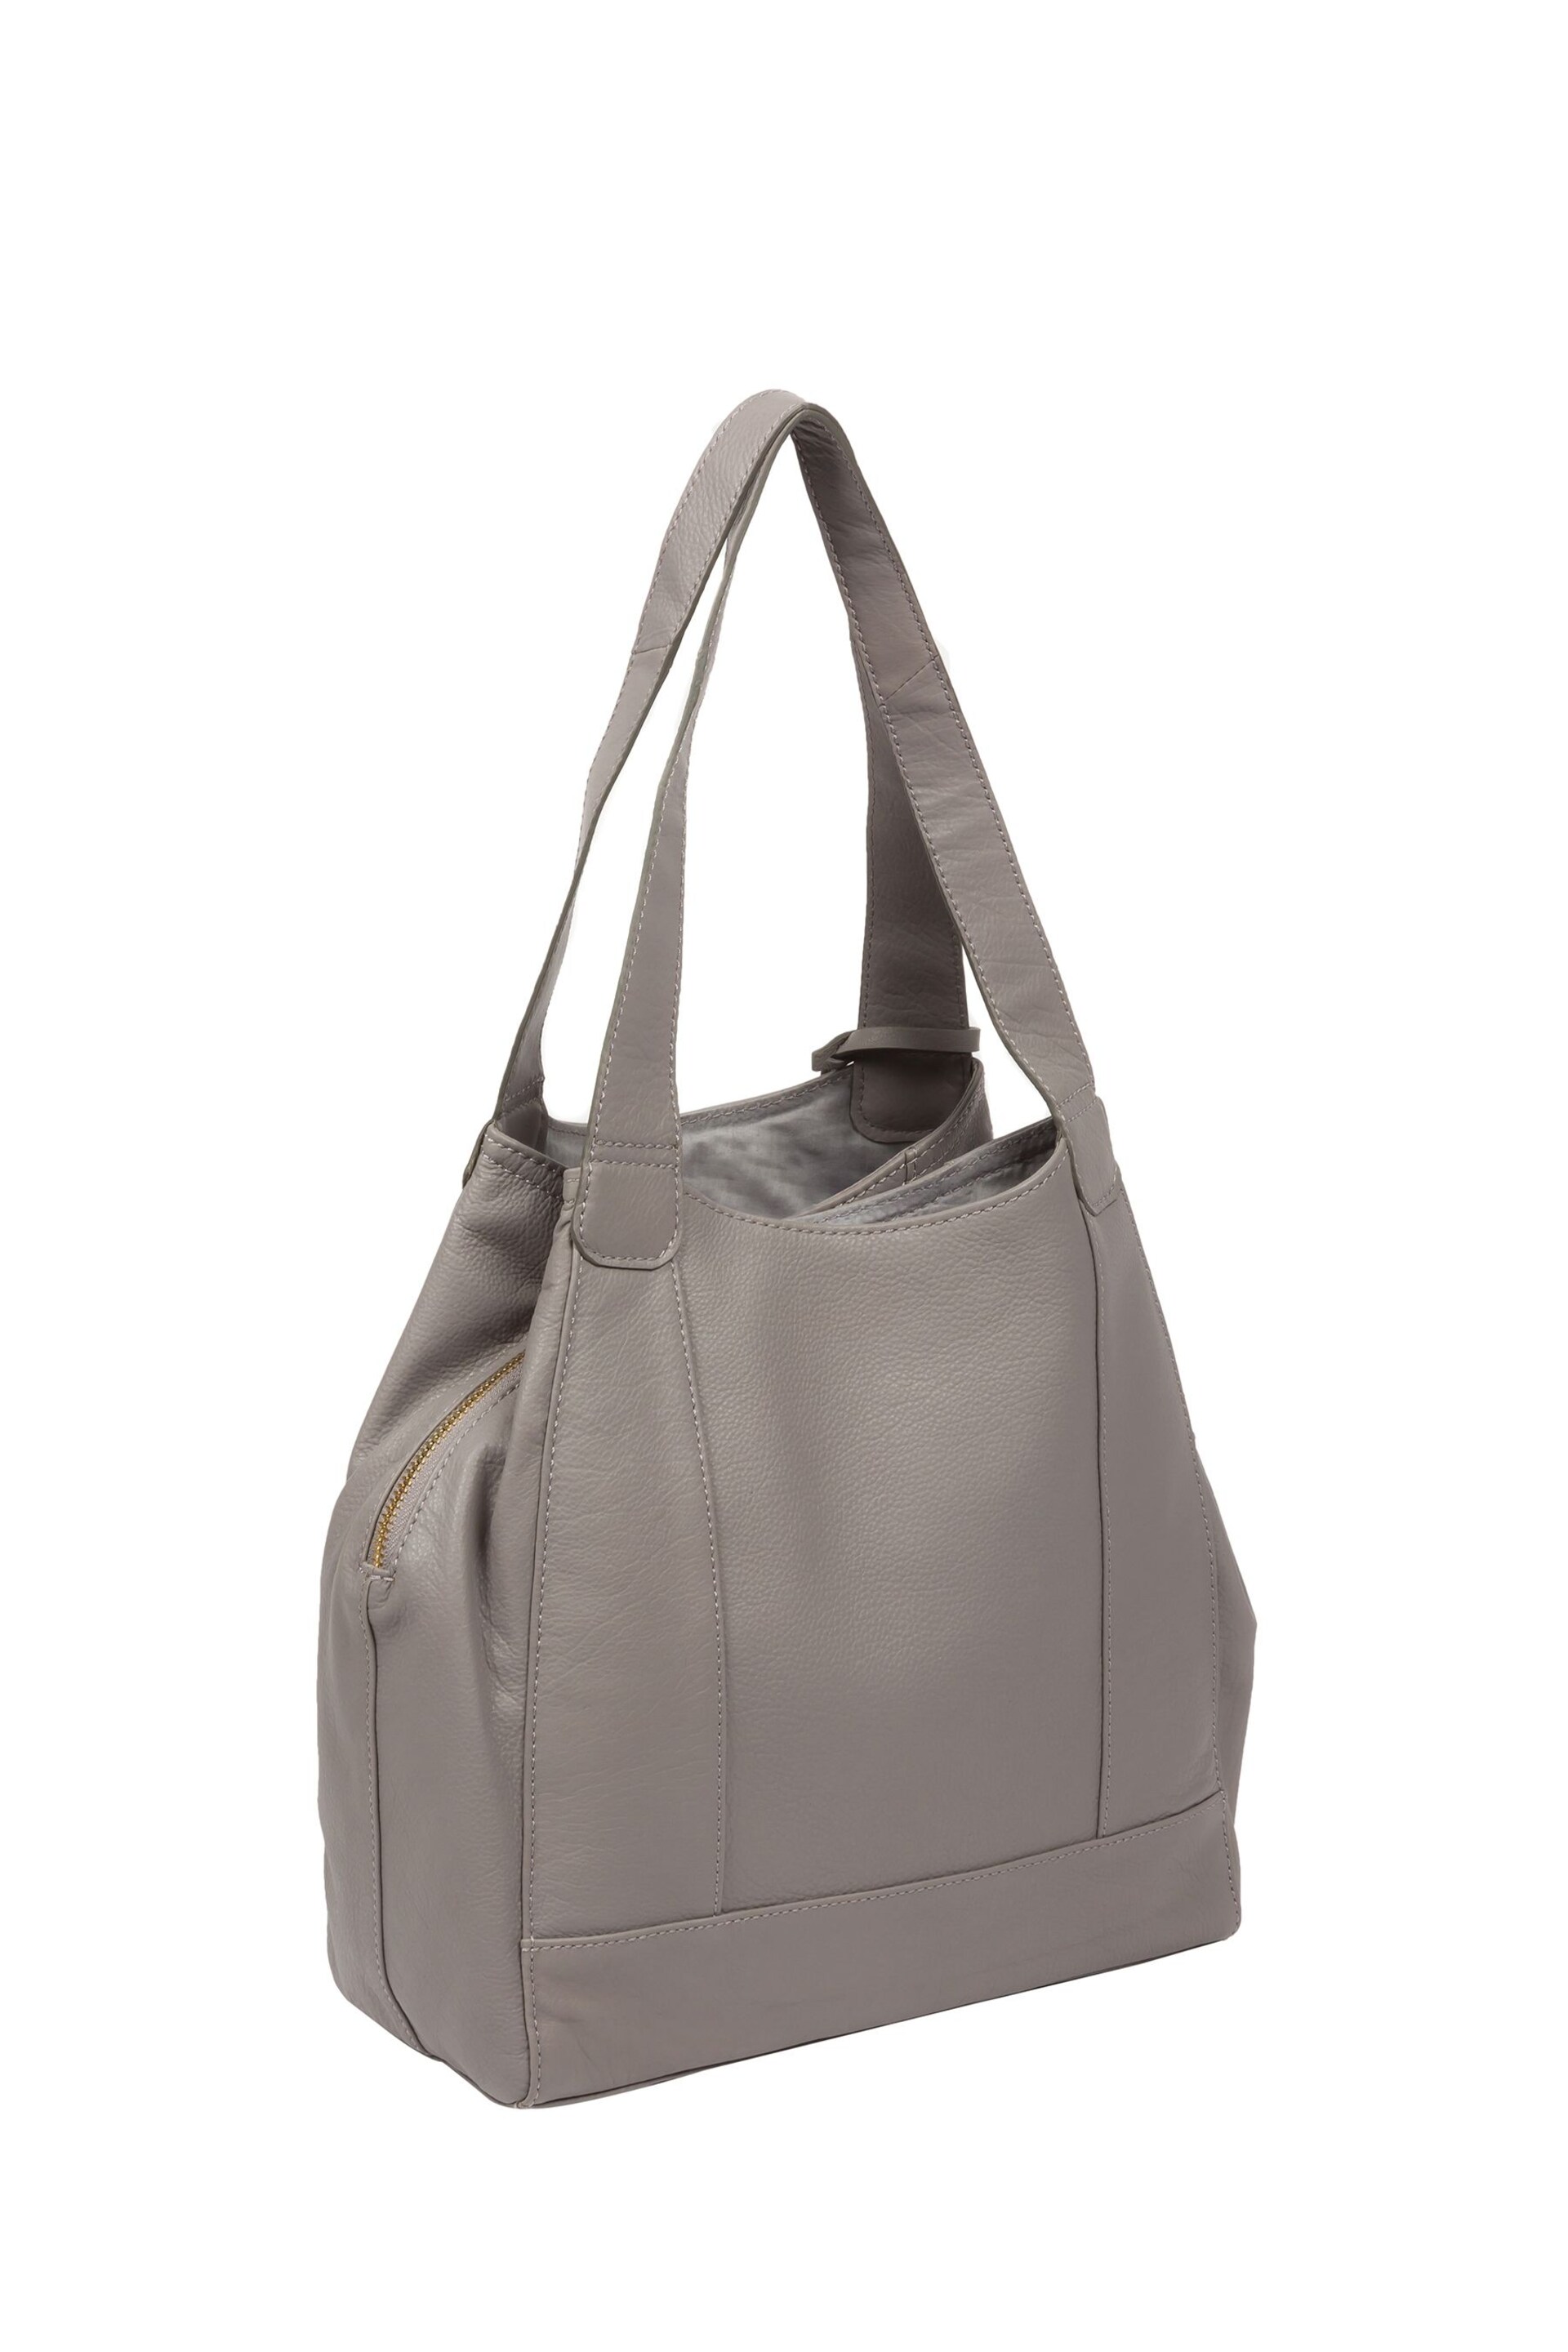 Pure Luxuries London Colette Leather Handbag - Image 4 of 7